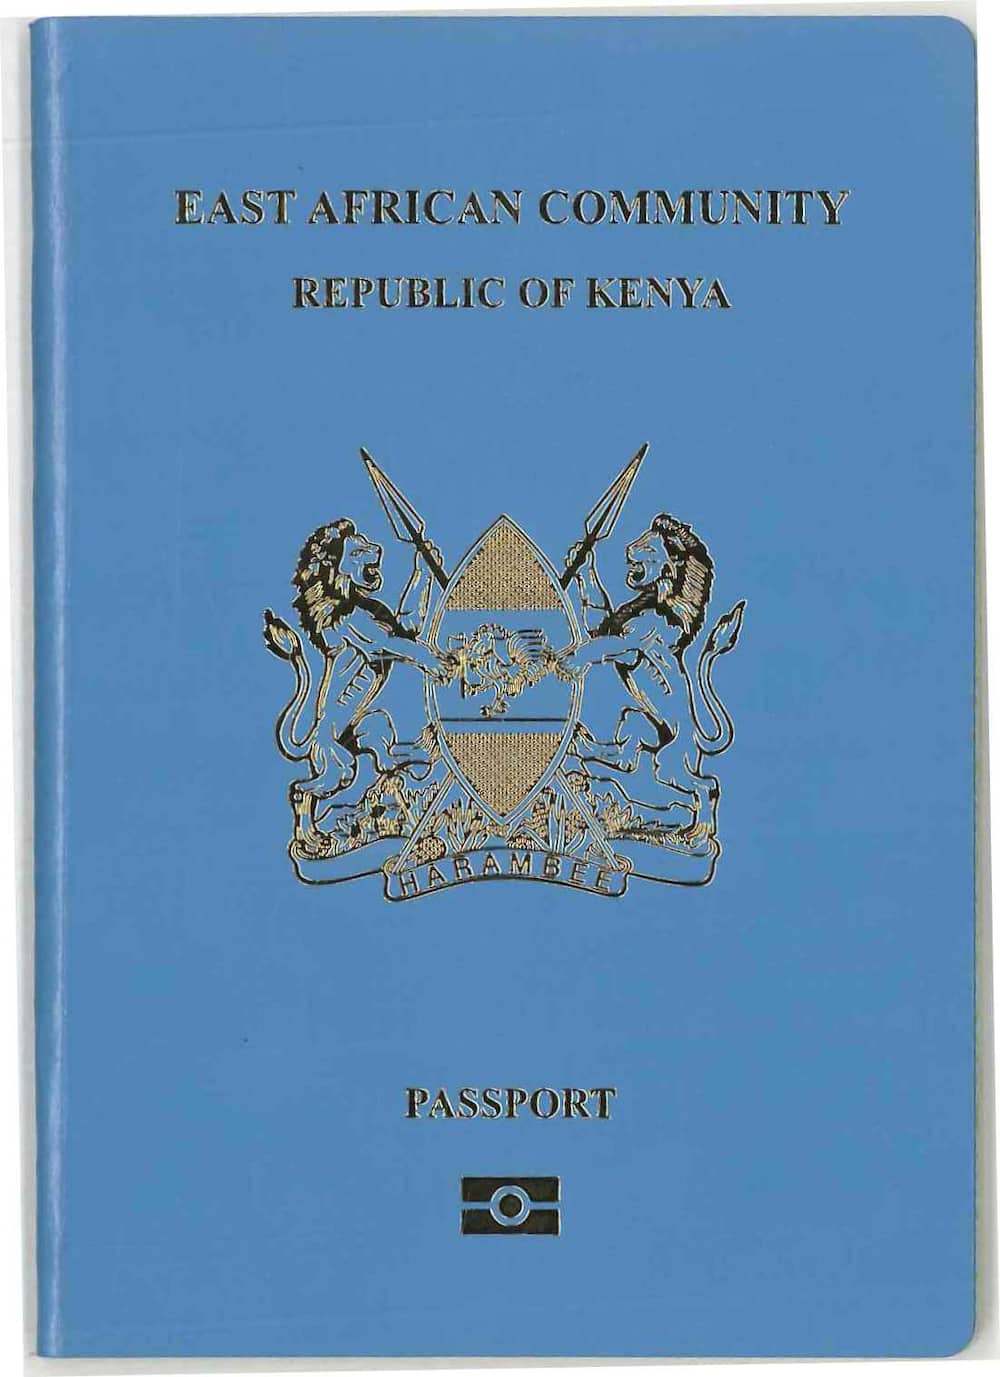 No US visa for Kenyans without e-passport - Embassy